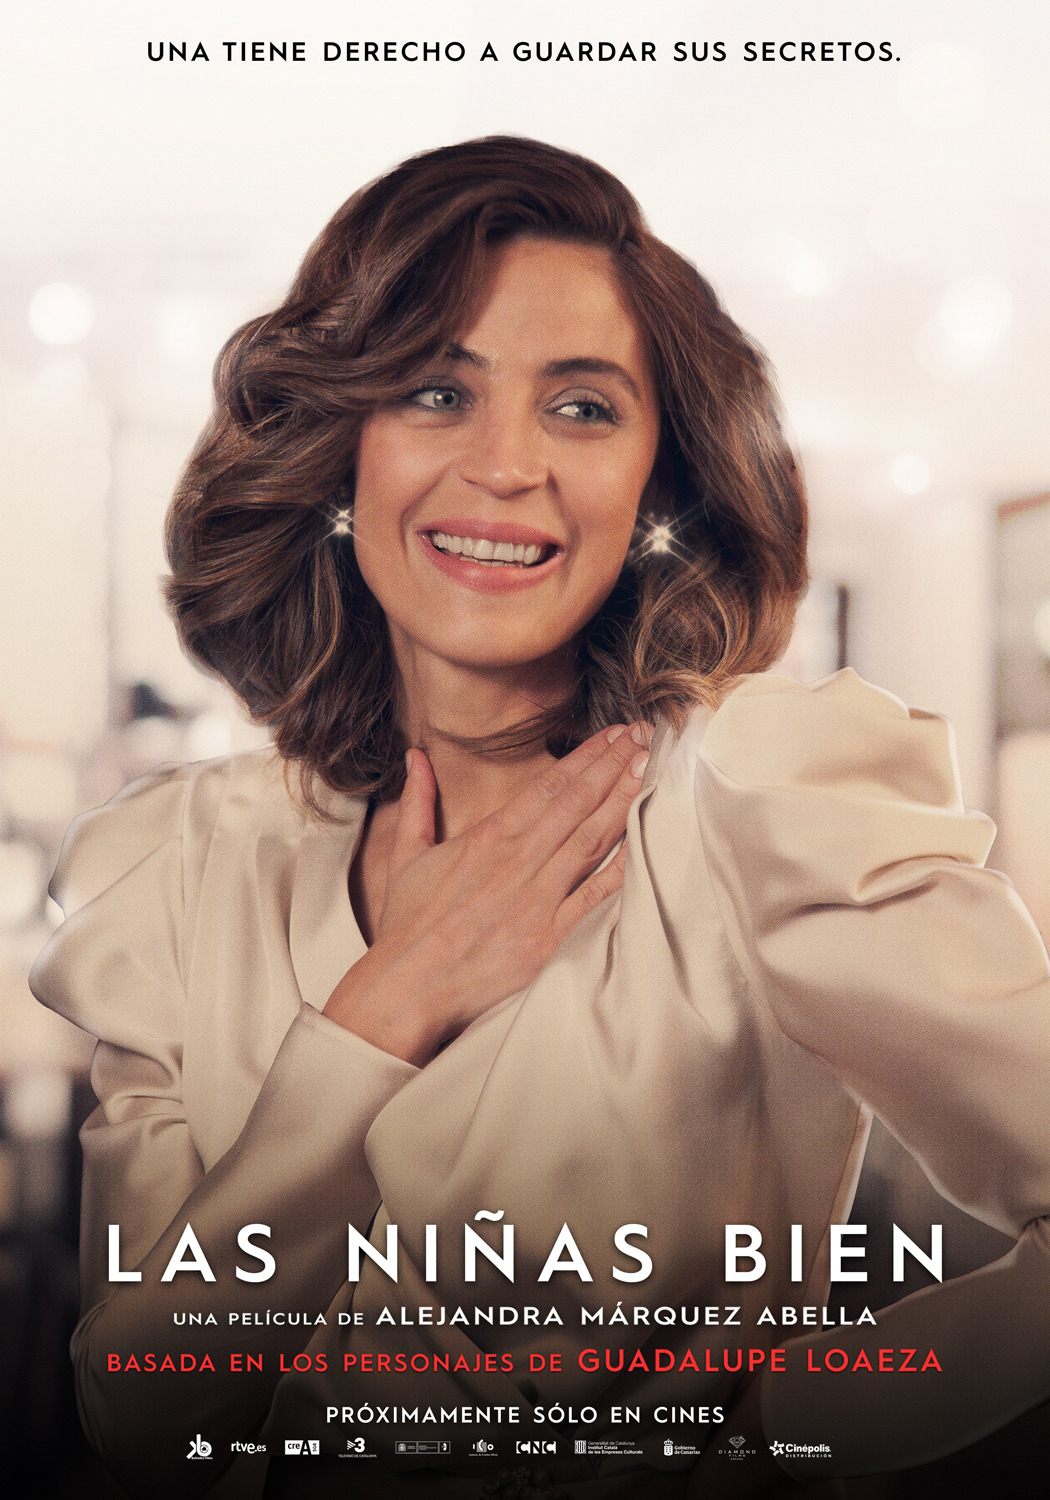 Extra Large Movie Poster Image for Las niñas bien (#6 of 16)